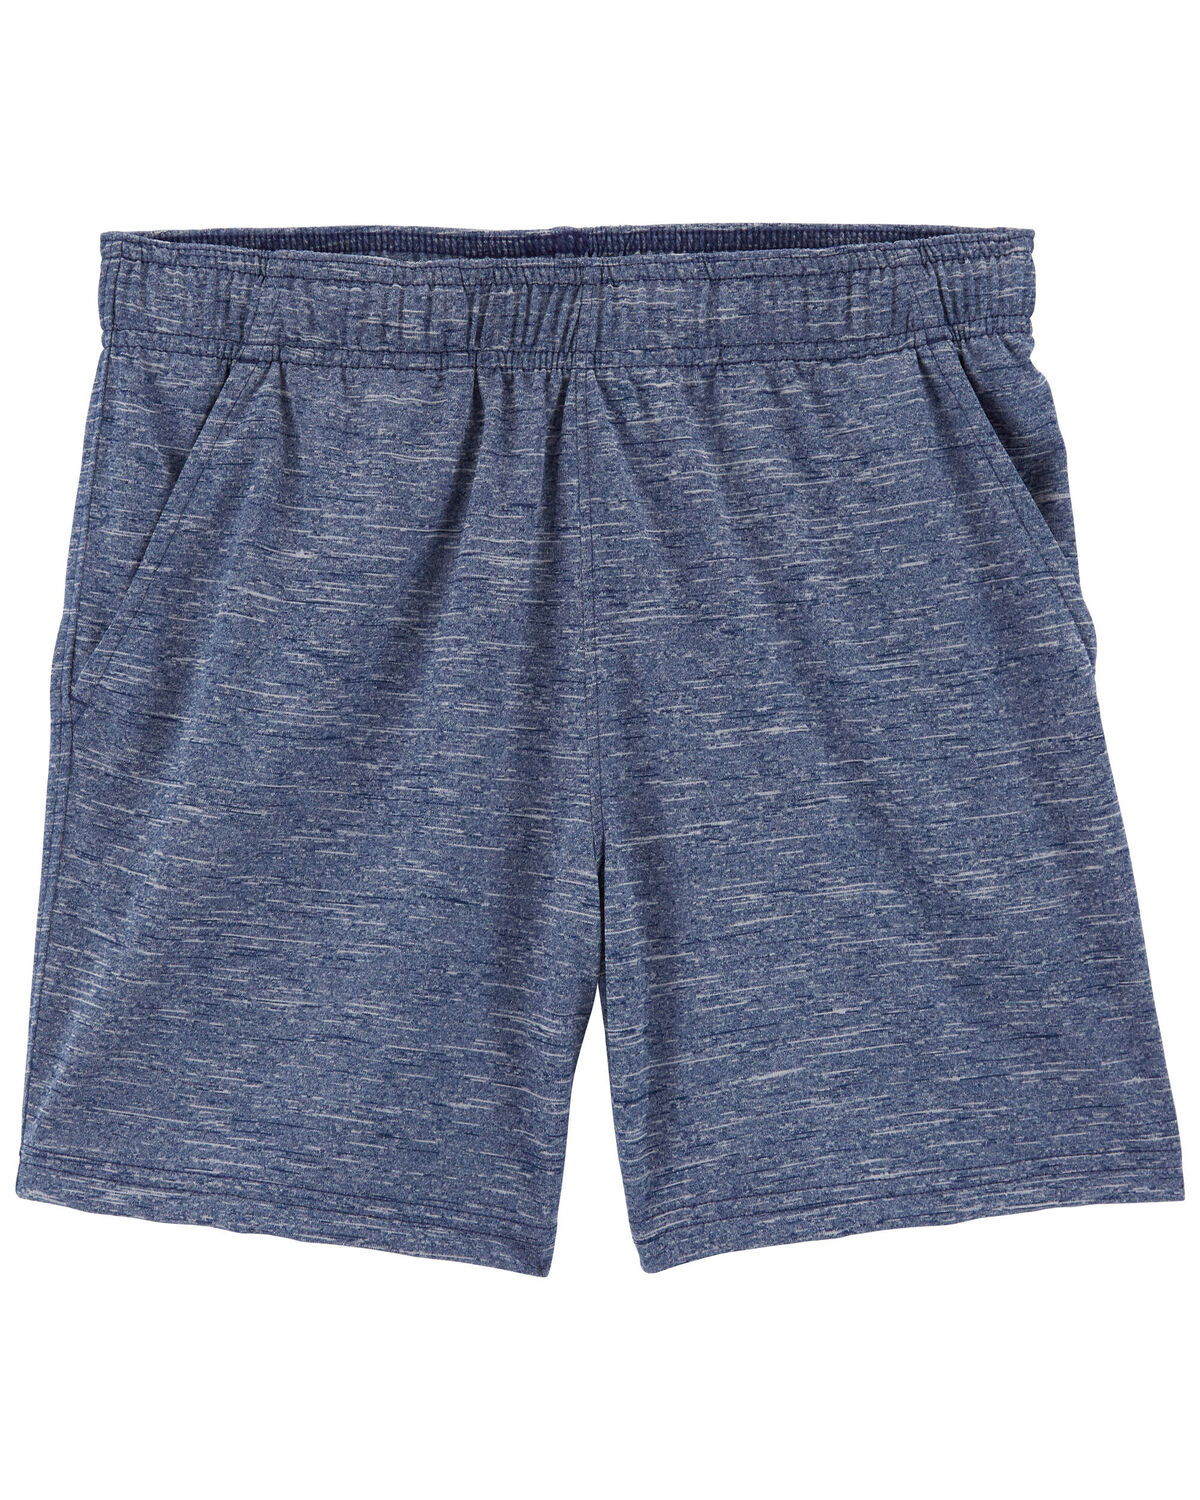 Kid Pull-On Athletic Shorts